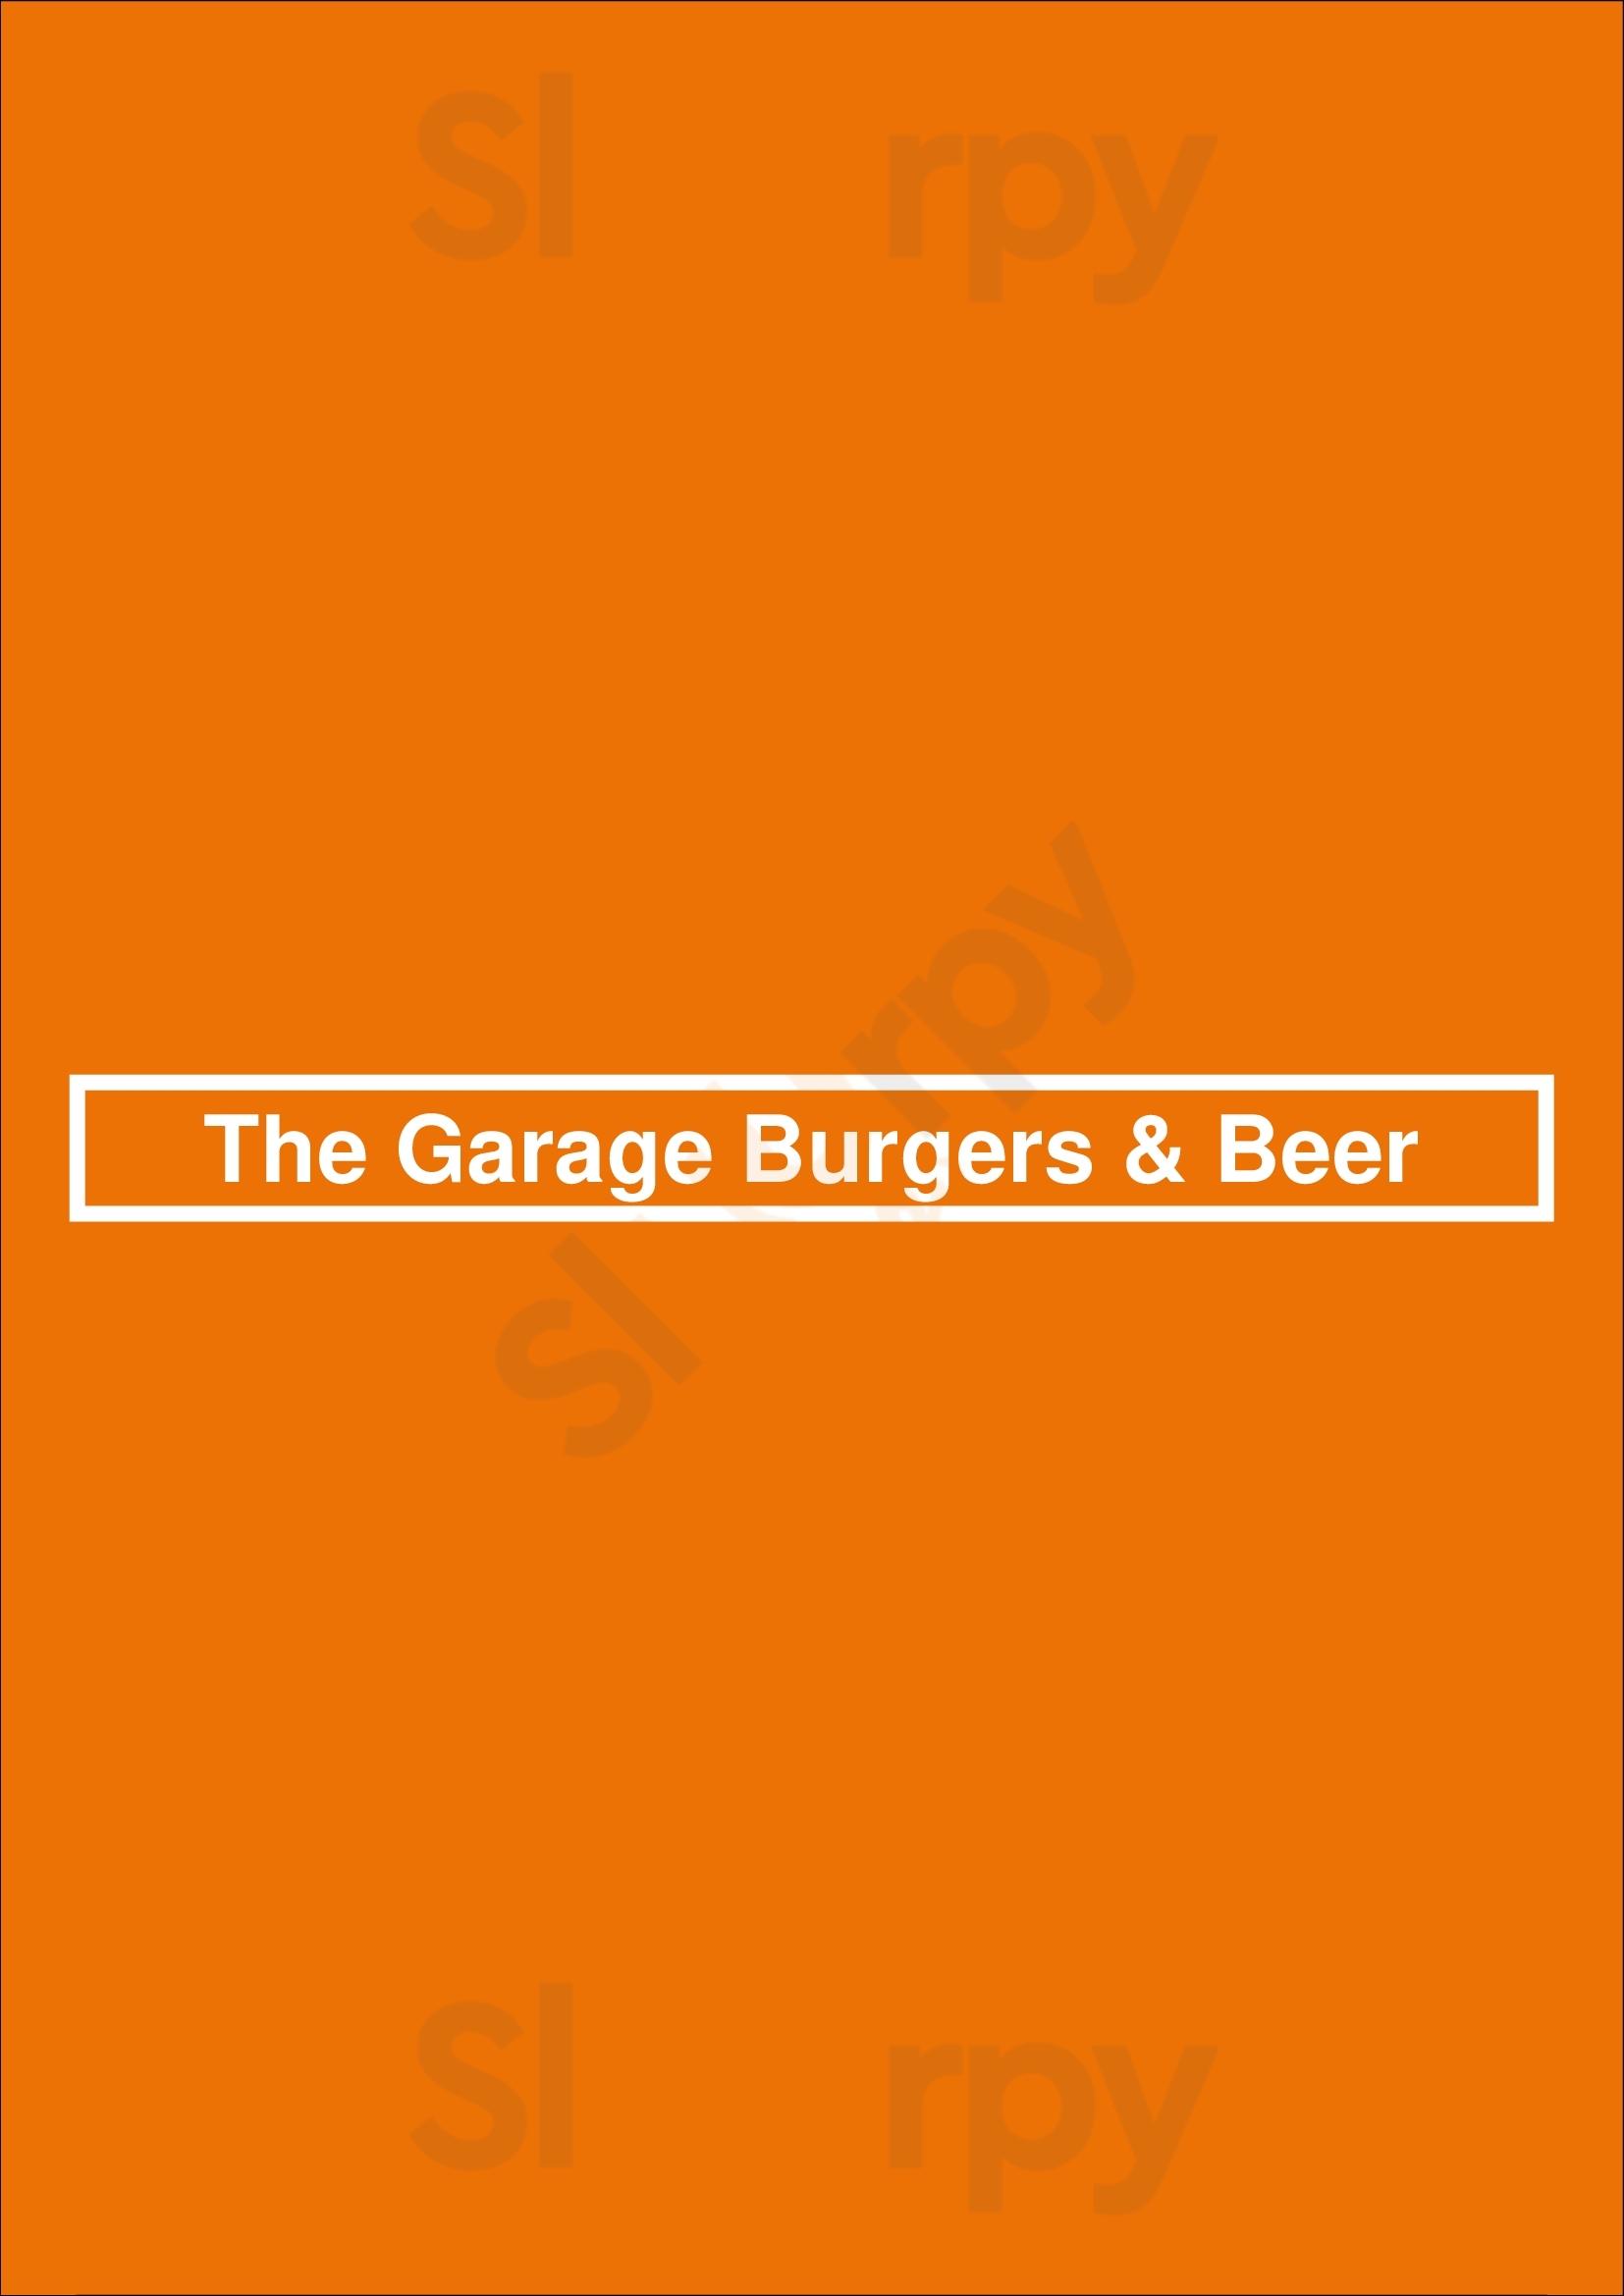 The Garage Burgers & Beer Oklahoma City Menu - 1